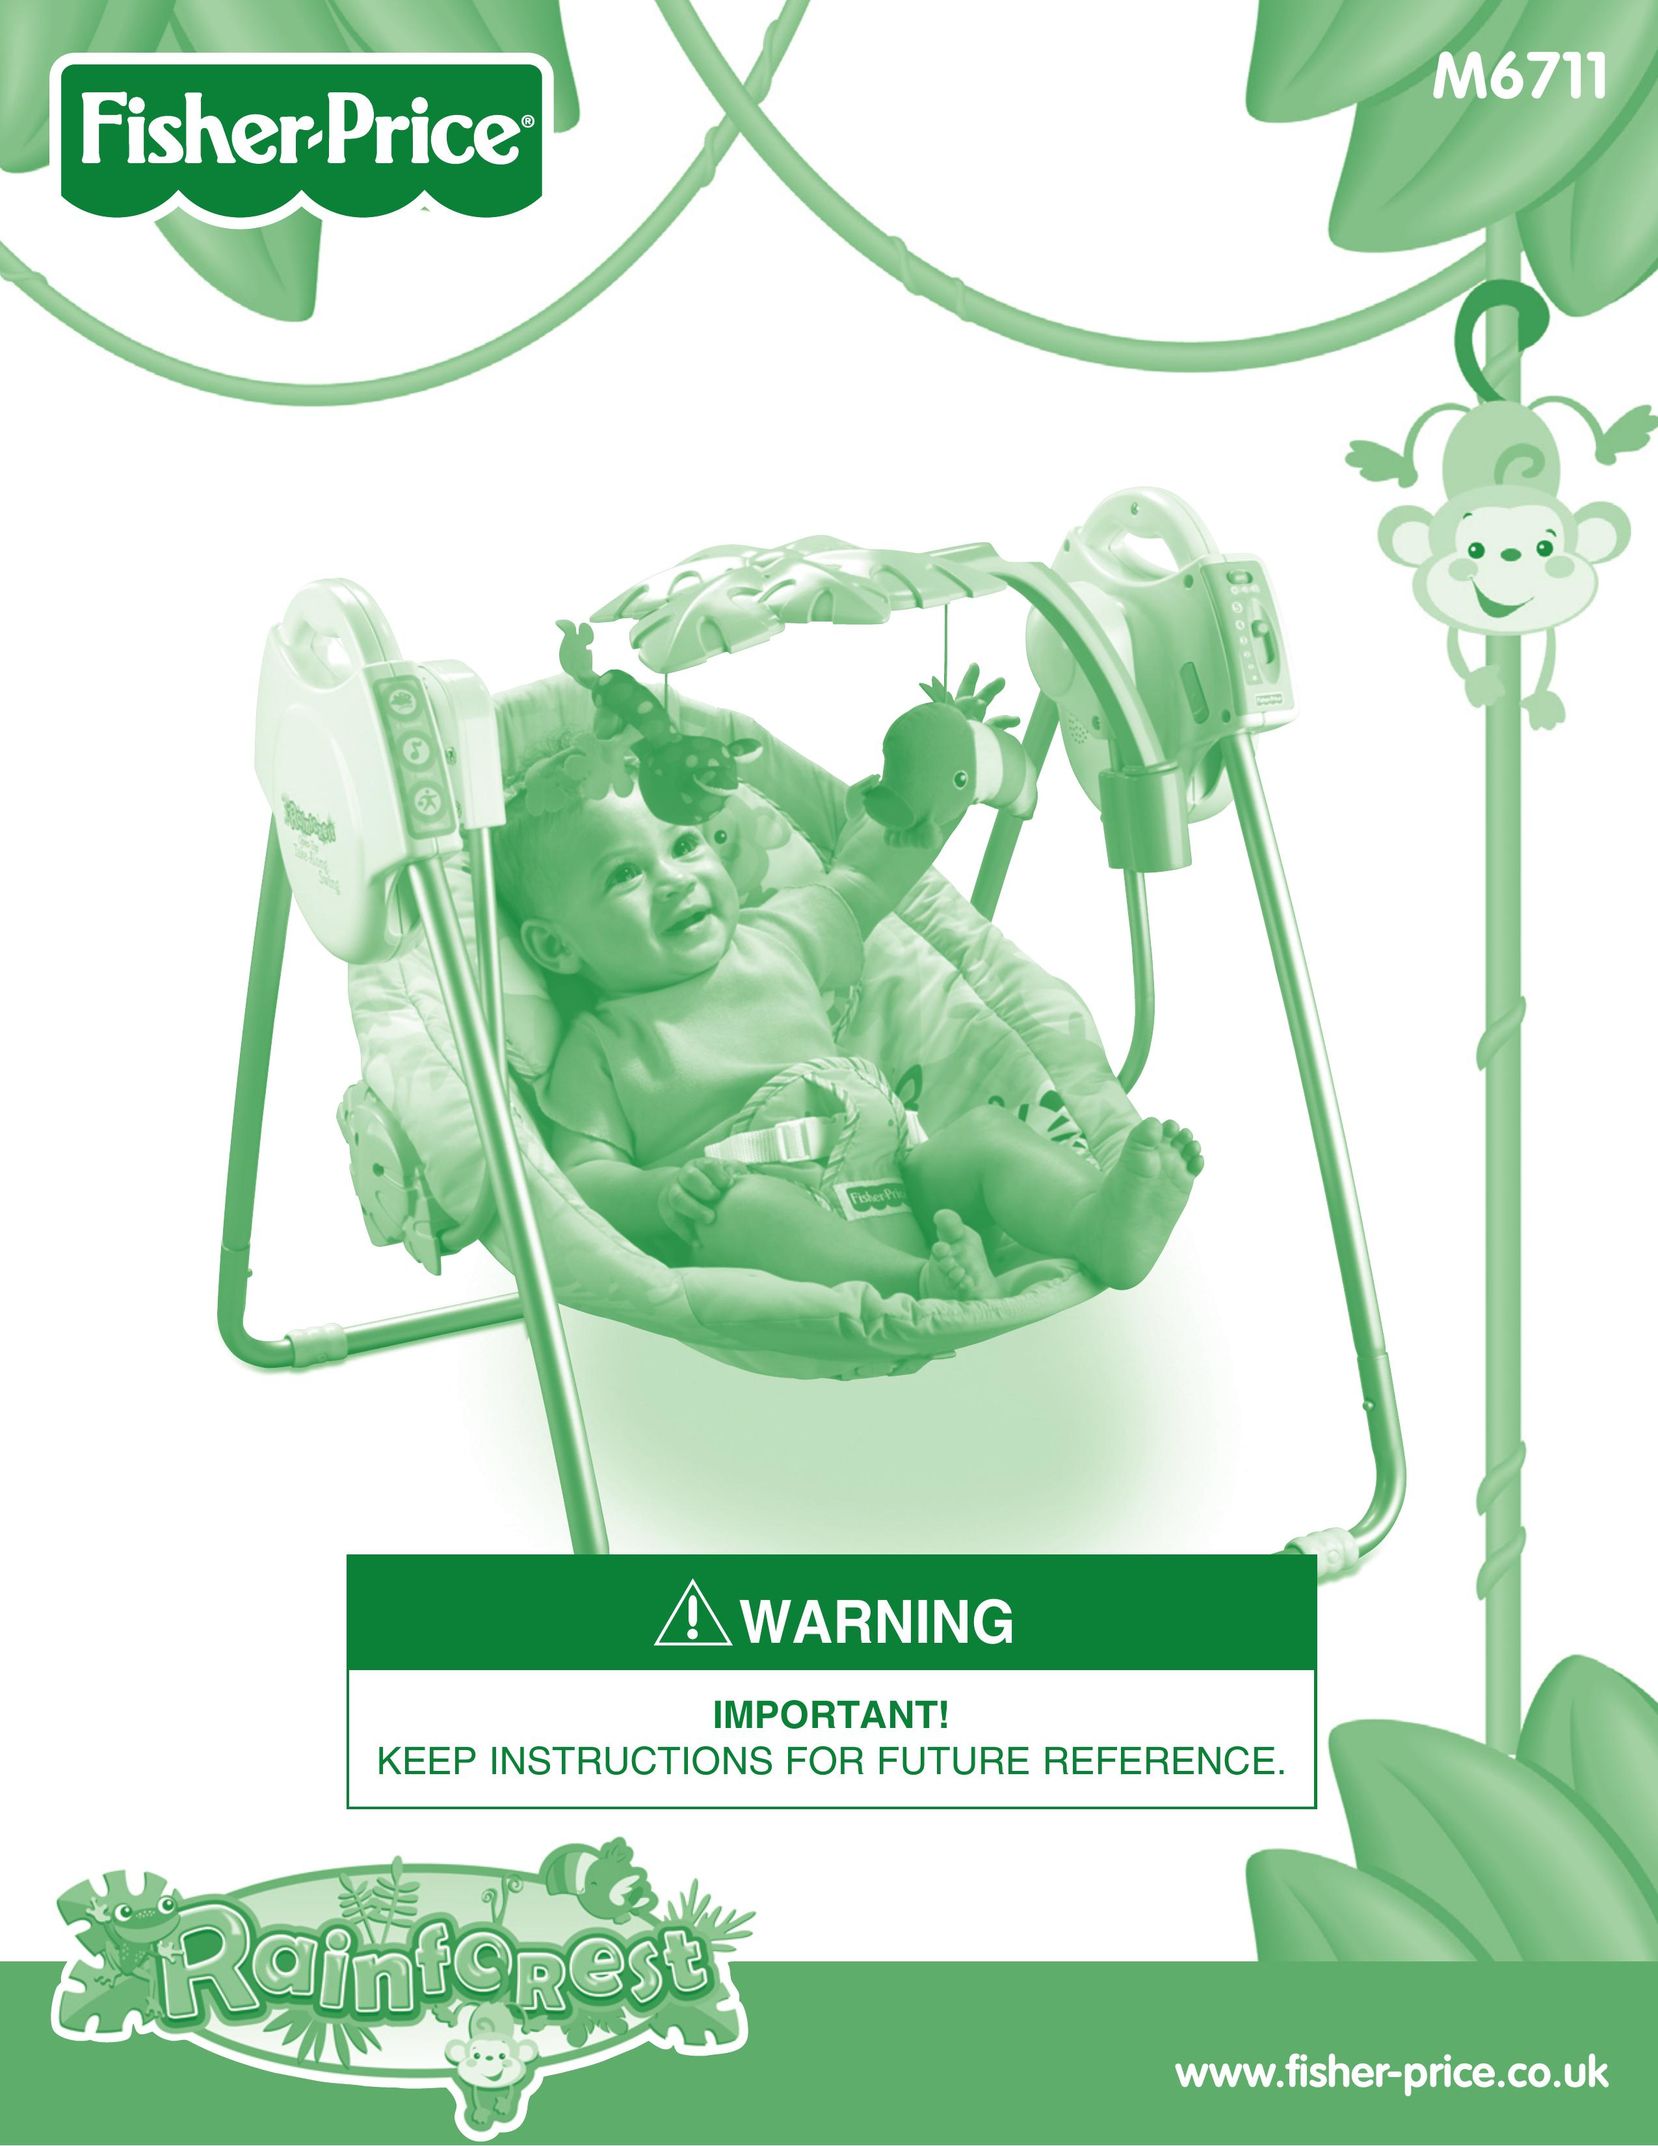 Fisher-Price M6711 Baby Swing User Manual